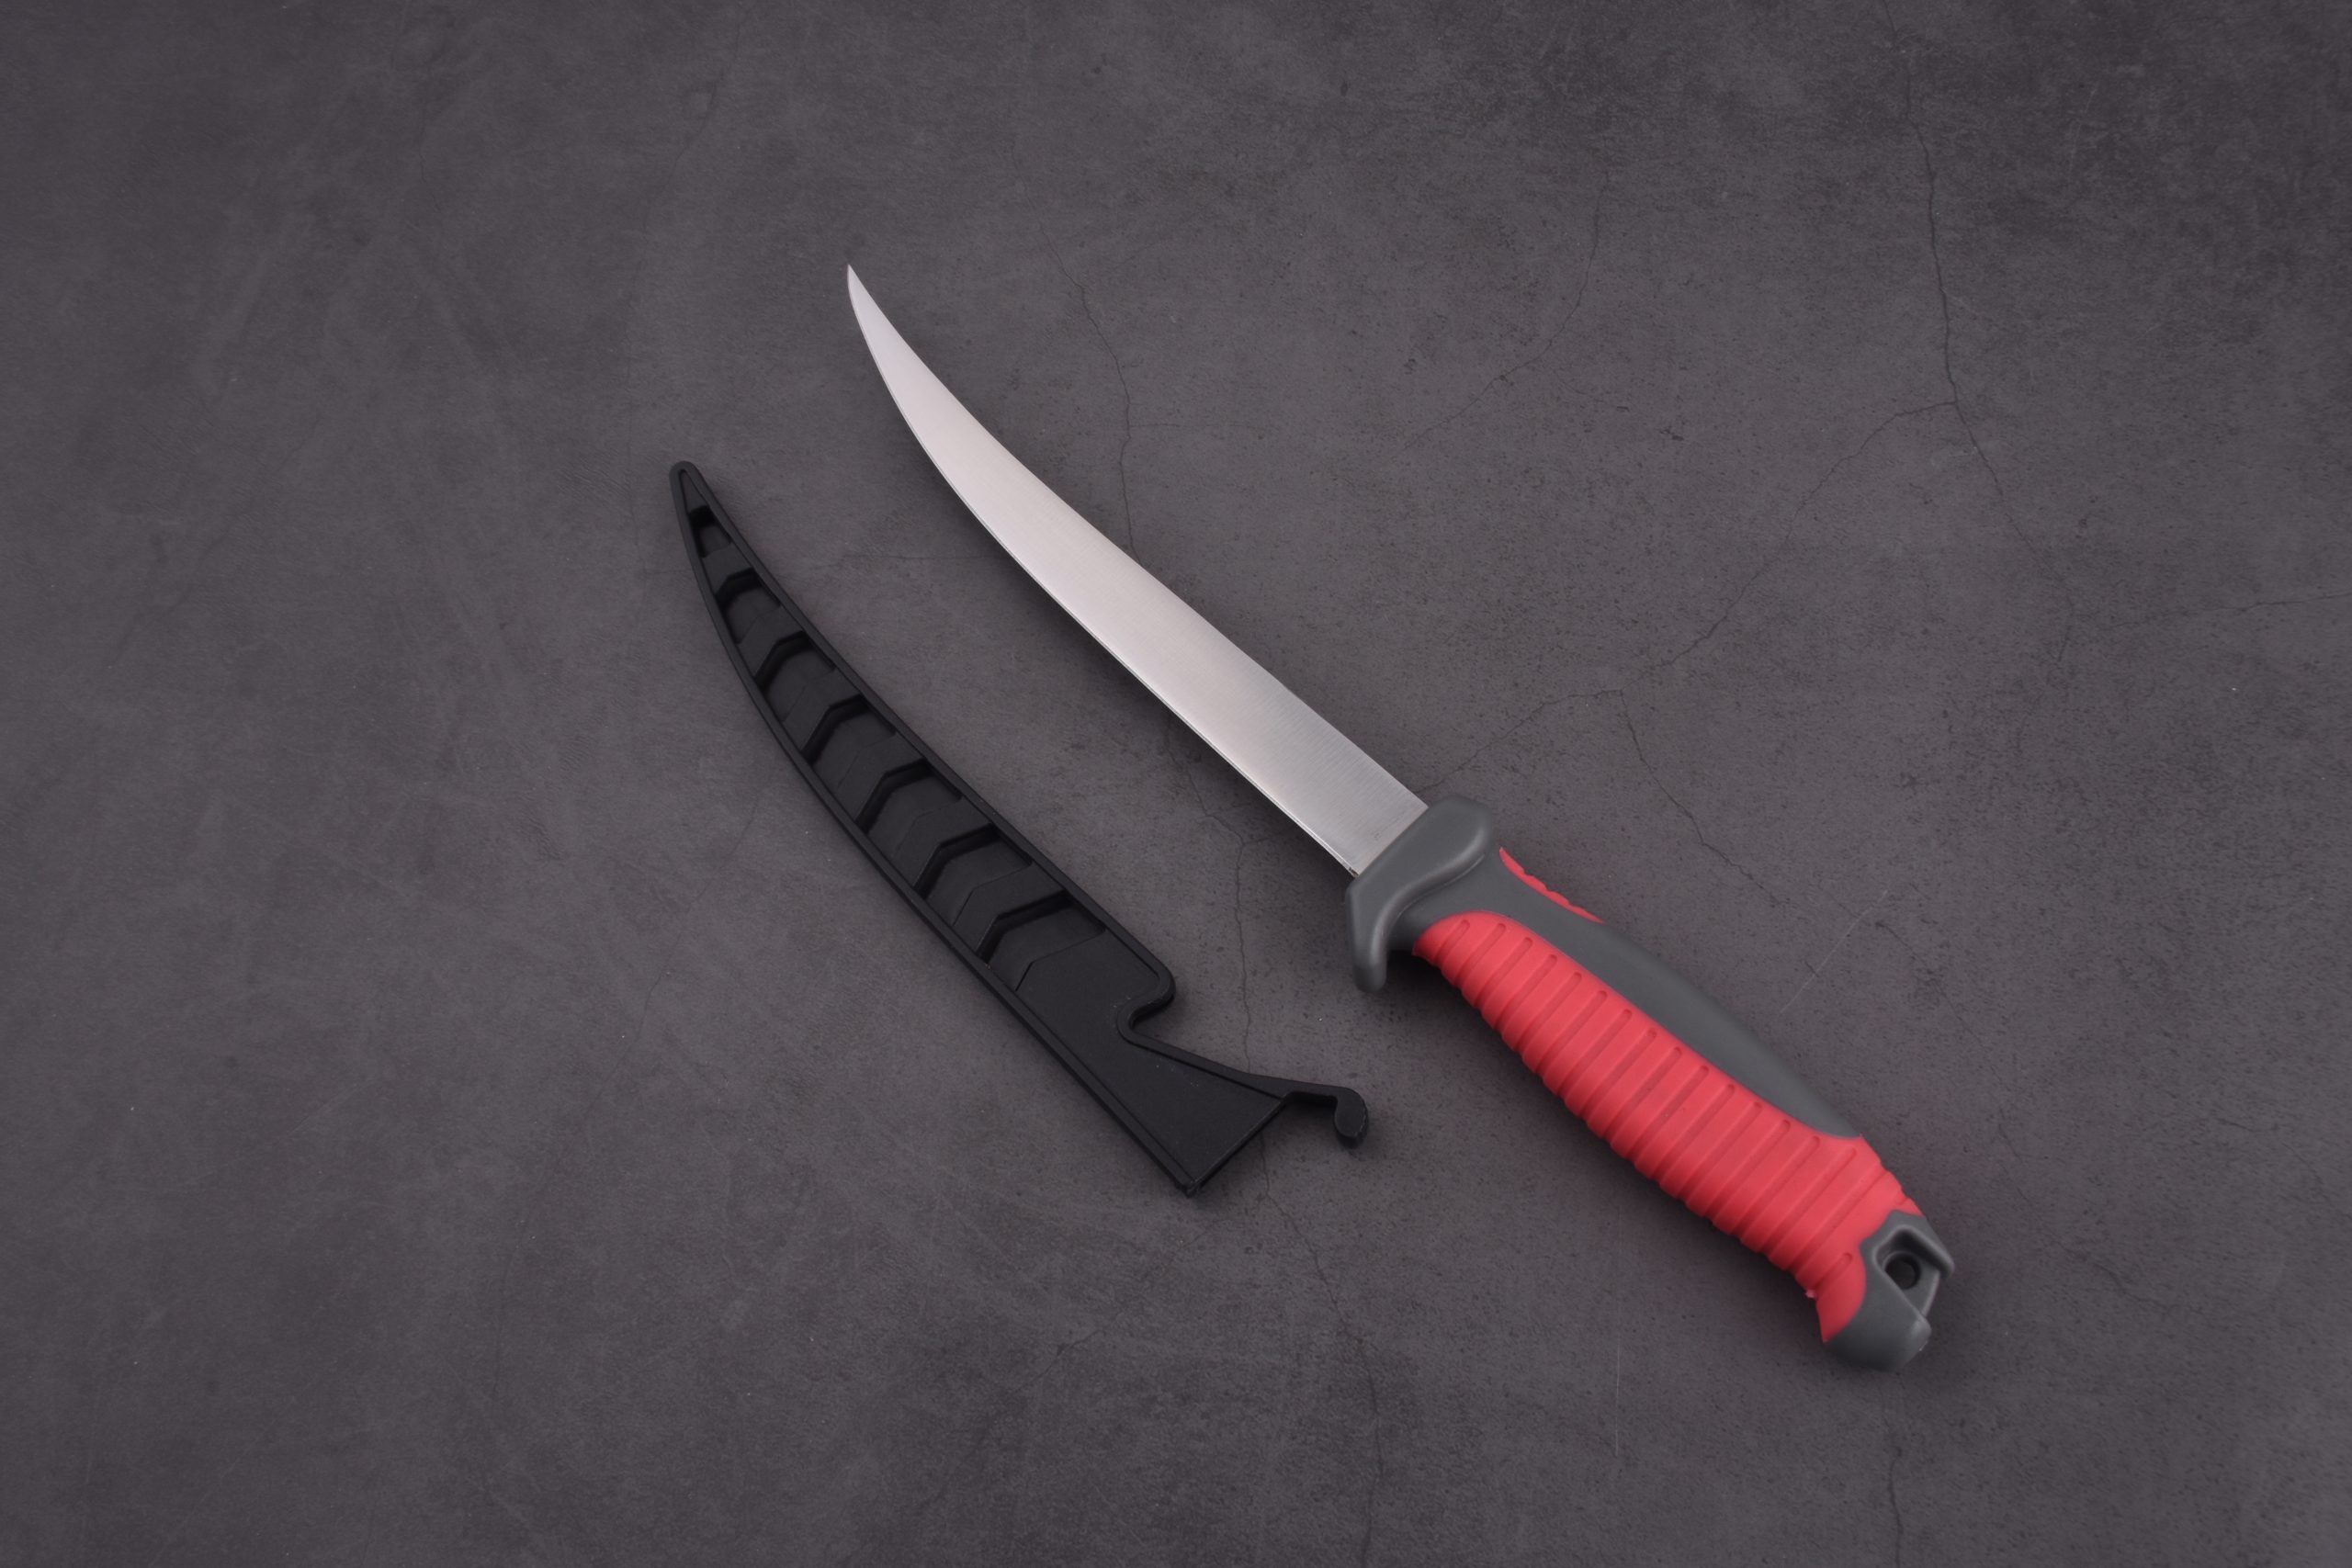 OEM Fixed Fishing Knife 3Cr13 Blade PP + TPR Handle dengan PP sheath hitam & merah FX- 22654